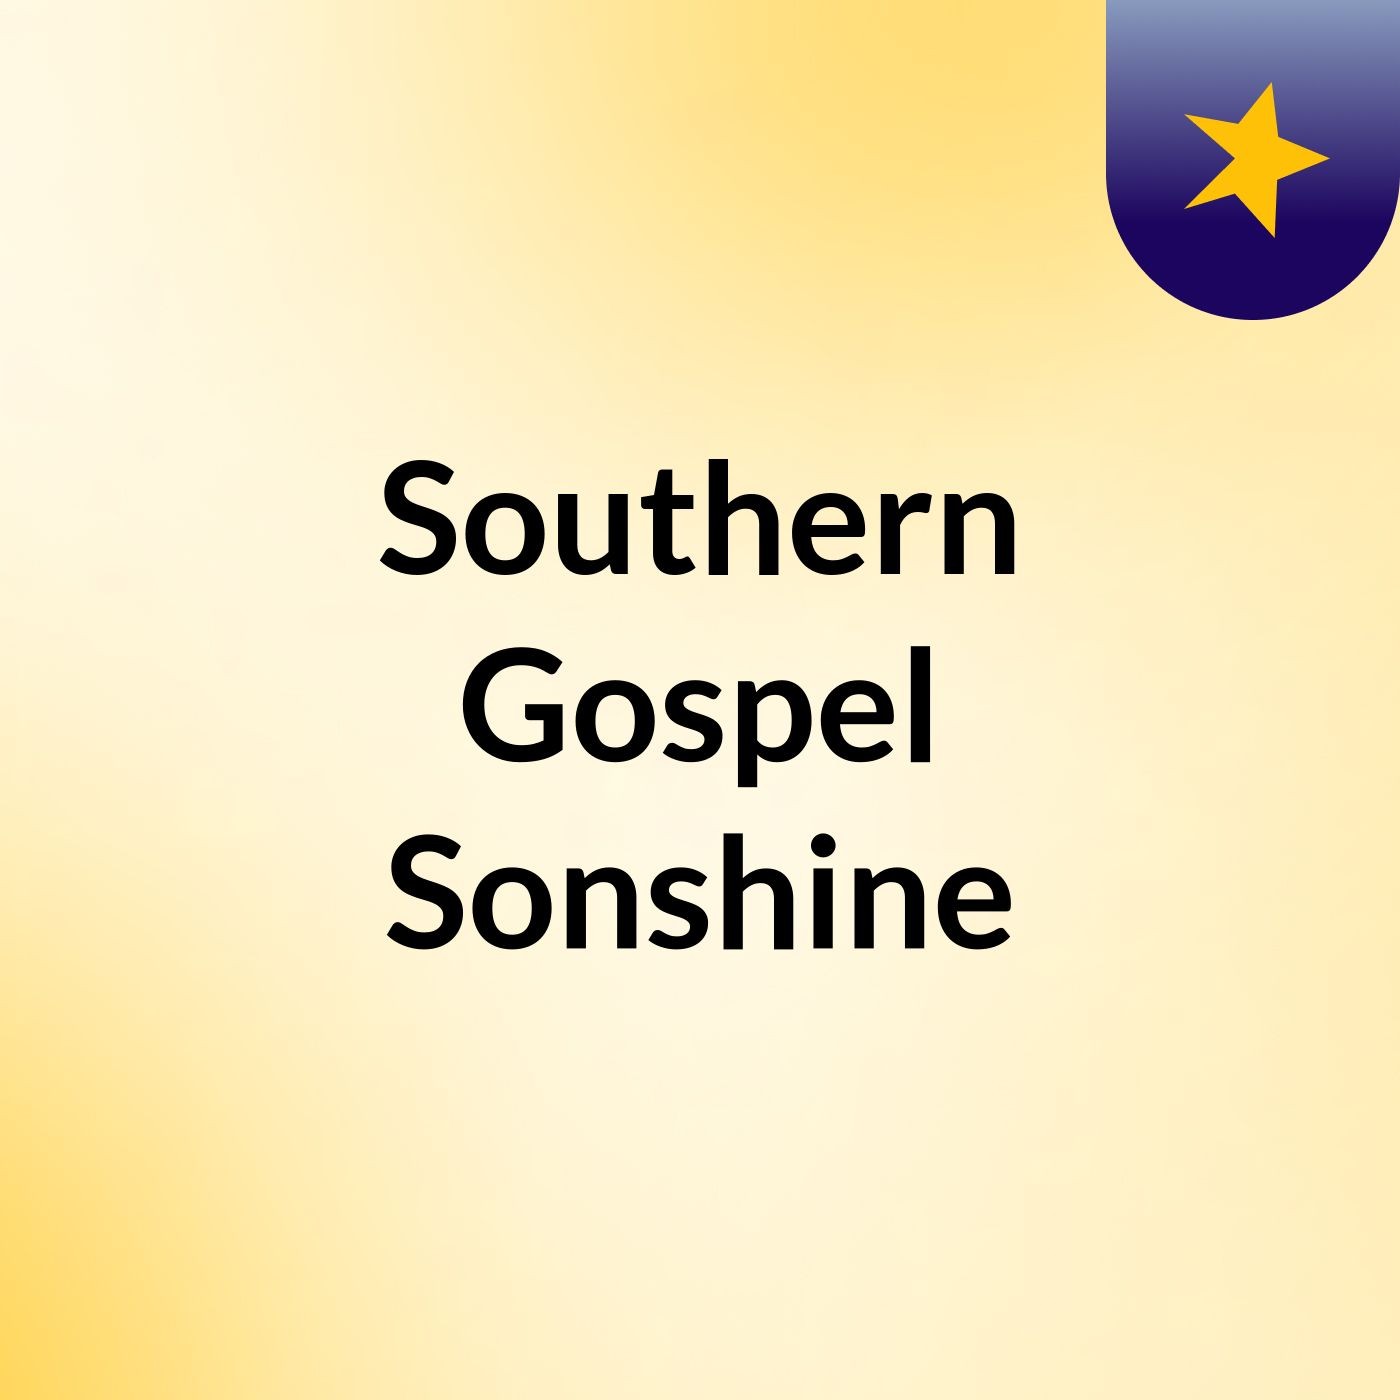 Southern Gospel Sonshine